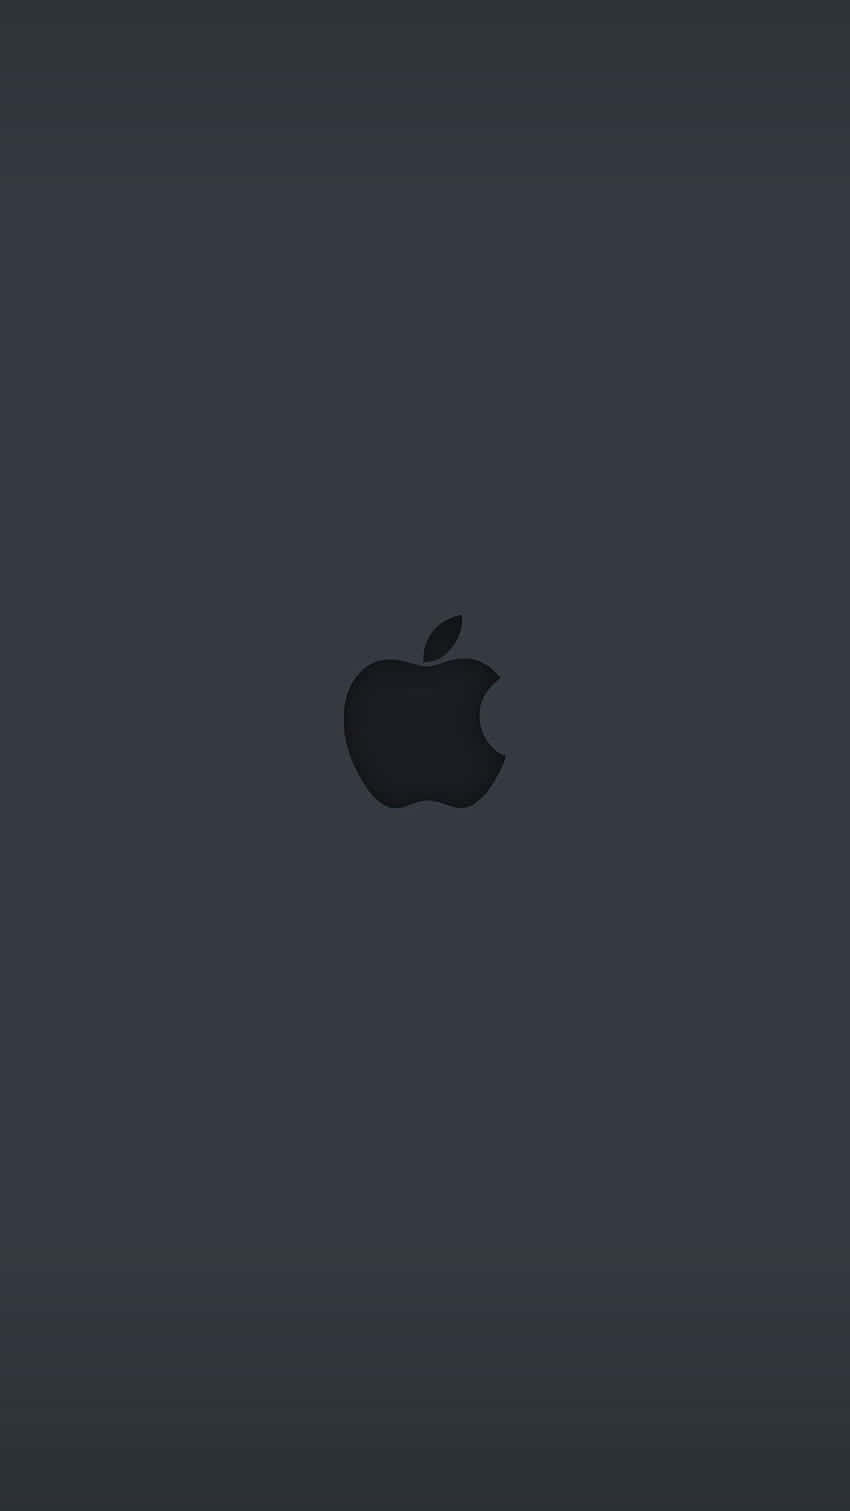 Black Apple Logo In Gray Wallpaper